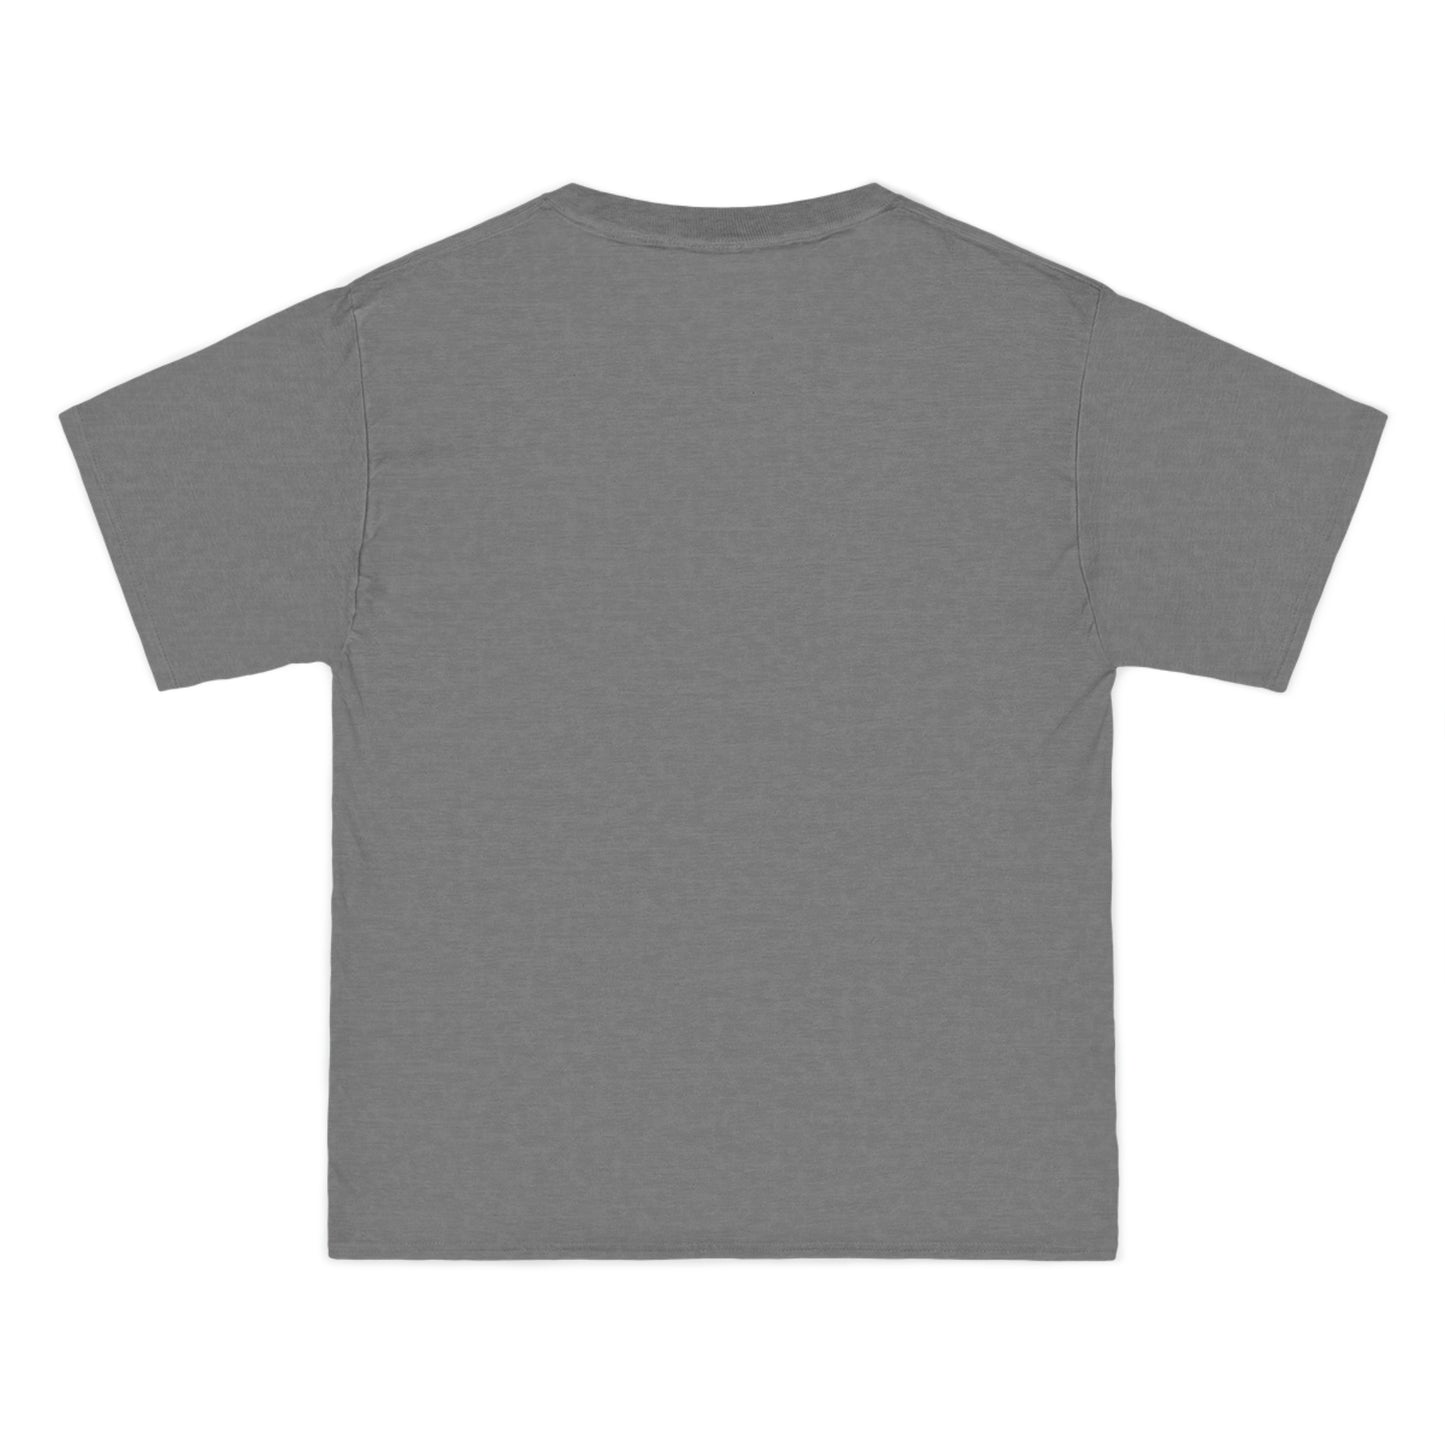 Groovy Sticky Super Soft Beefy-T®  Short-Sleeve T-Shirt